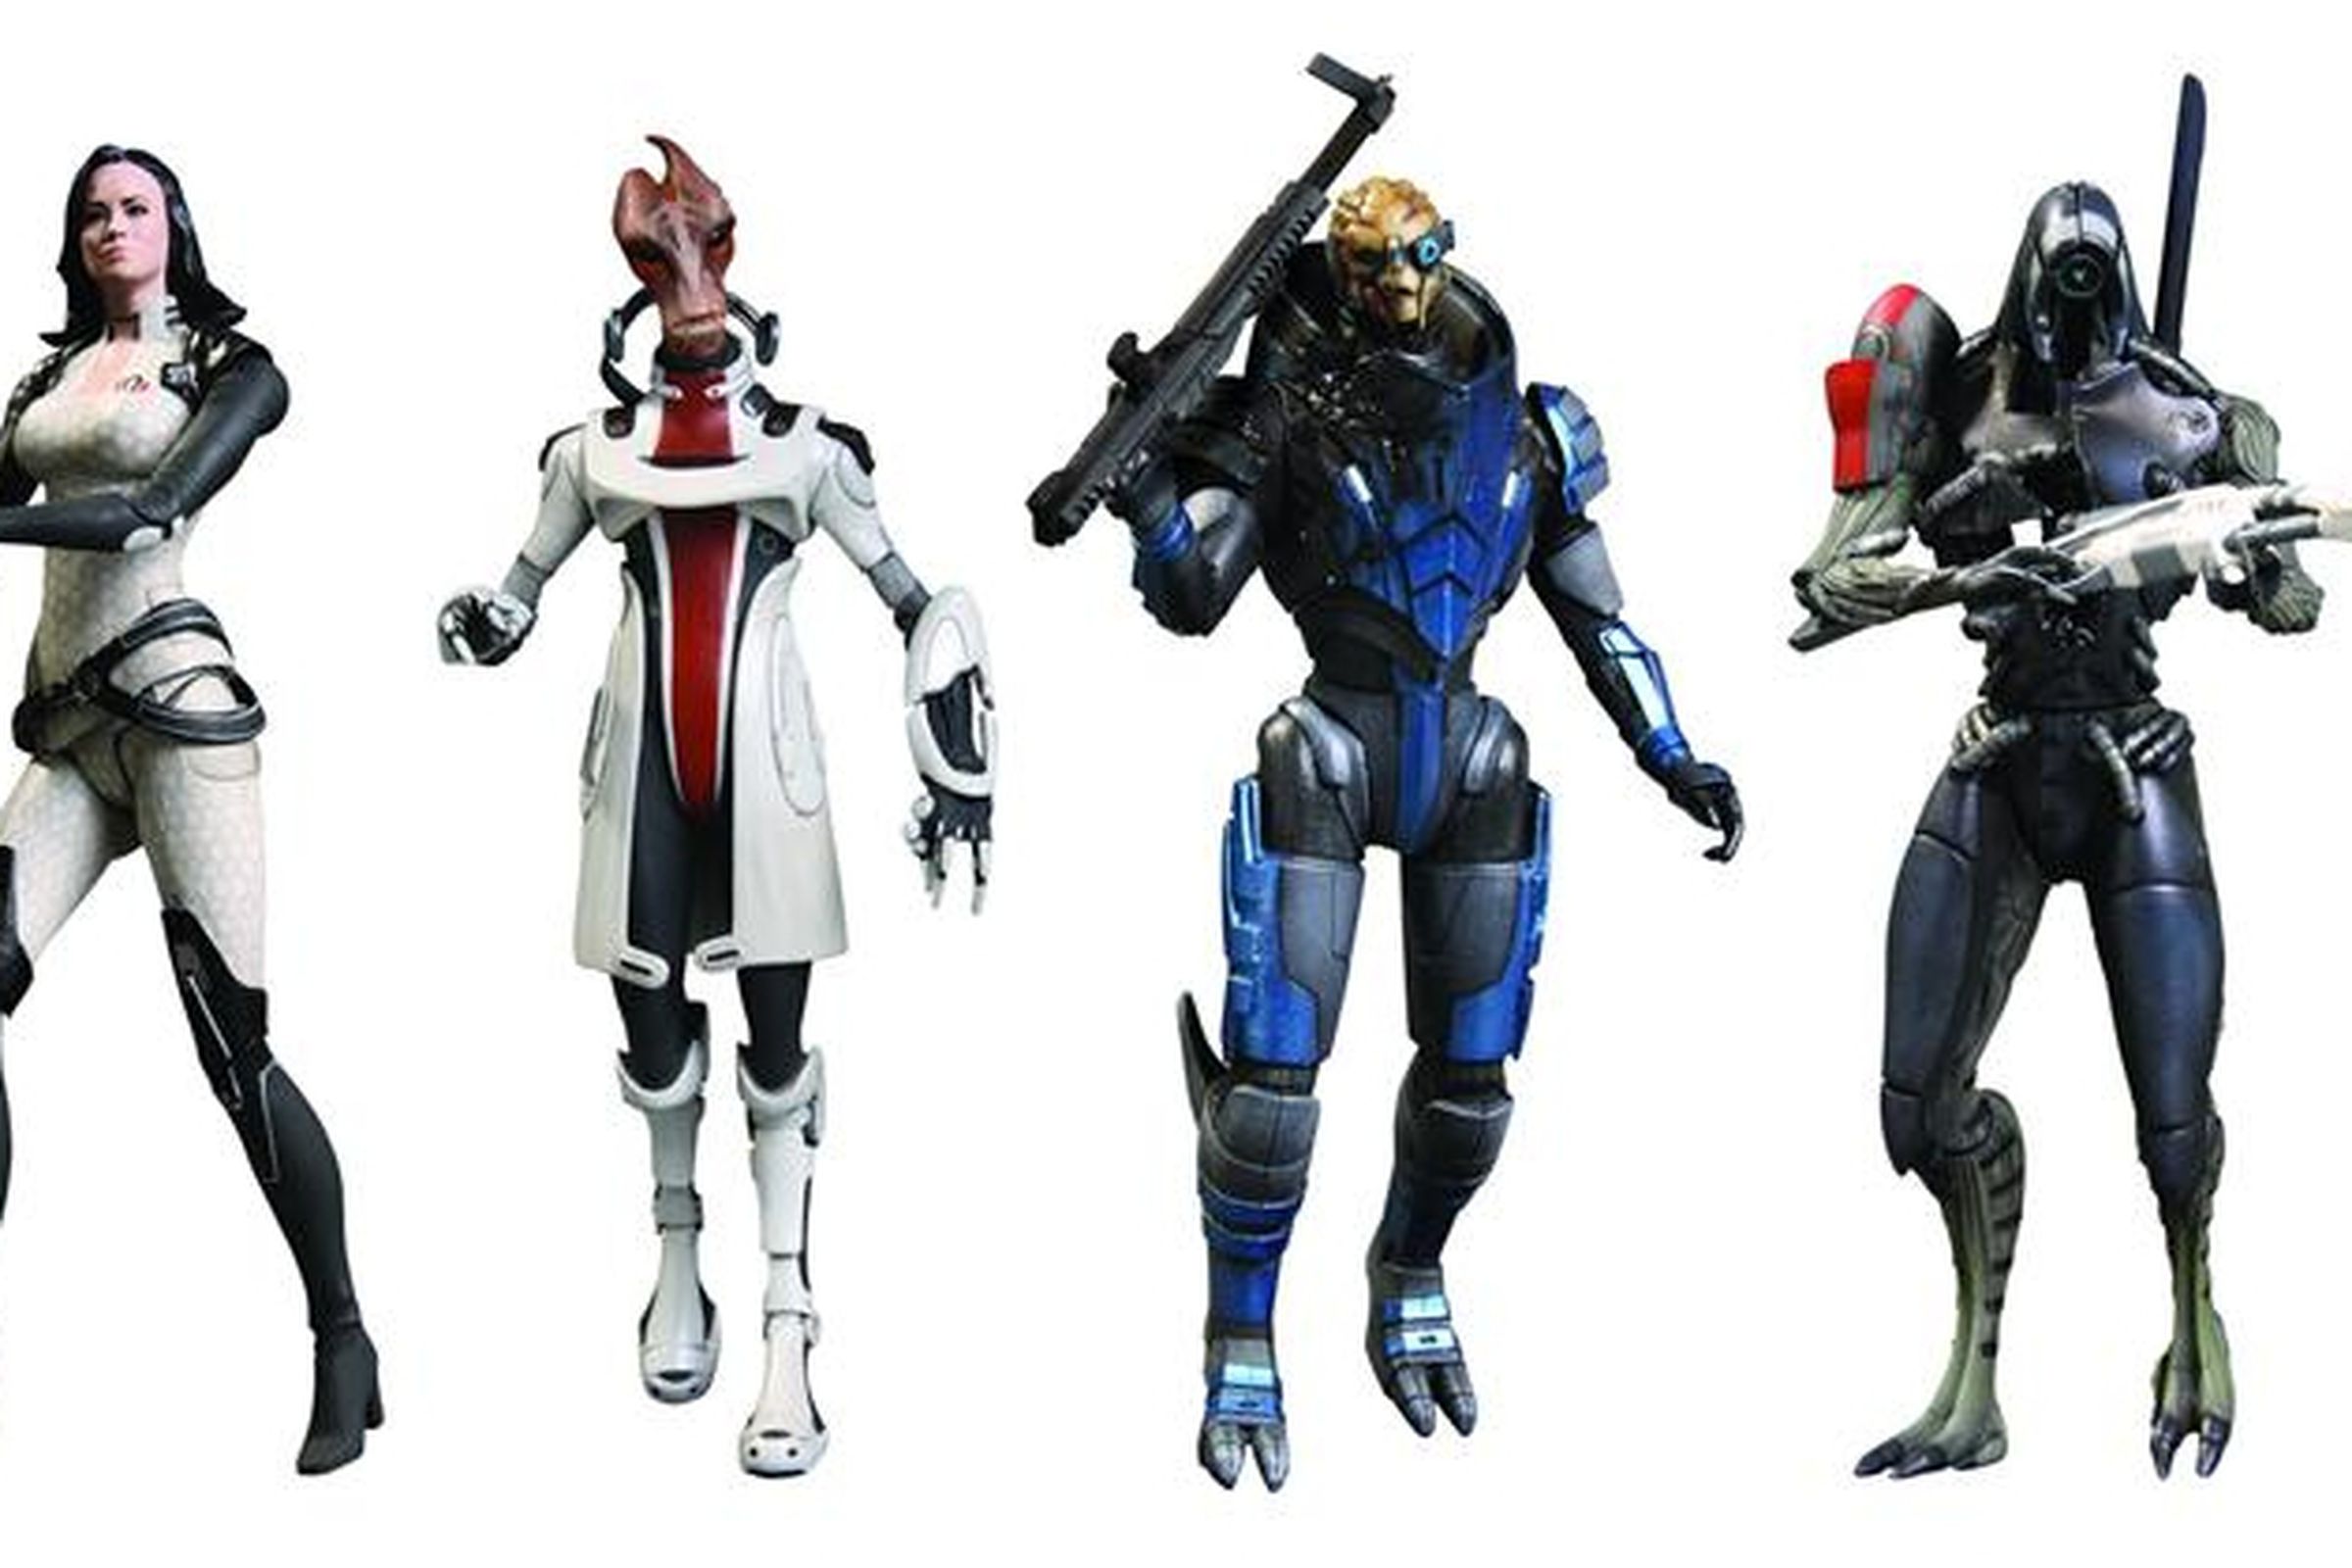 Mass Effect 3 action figures